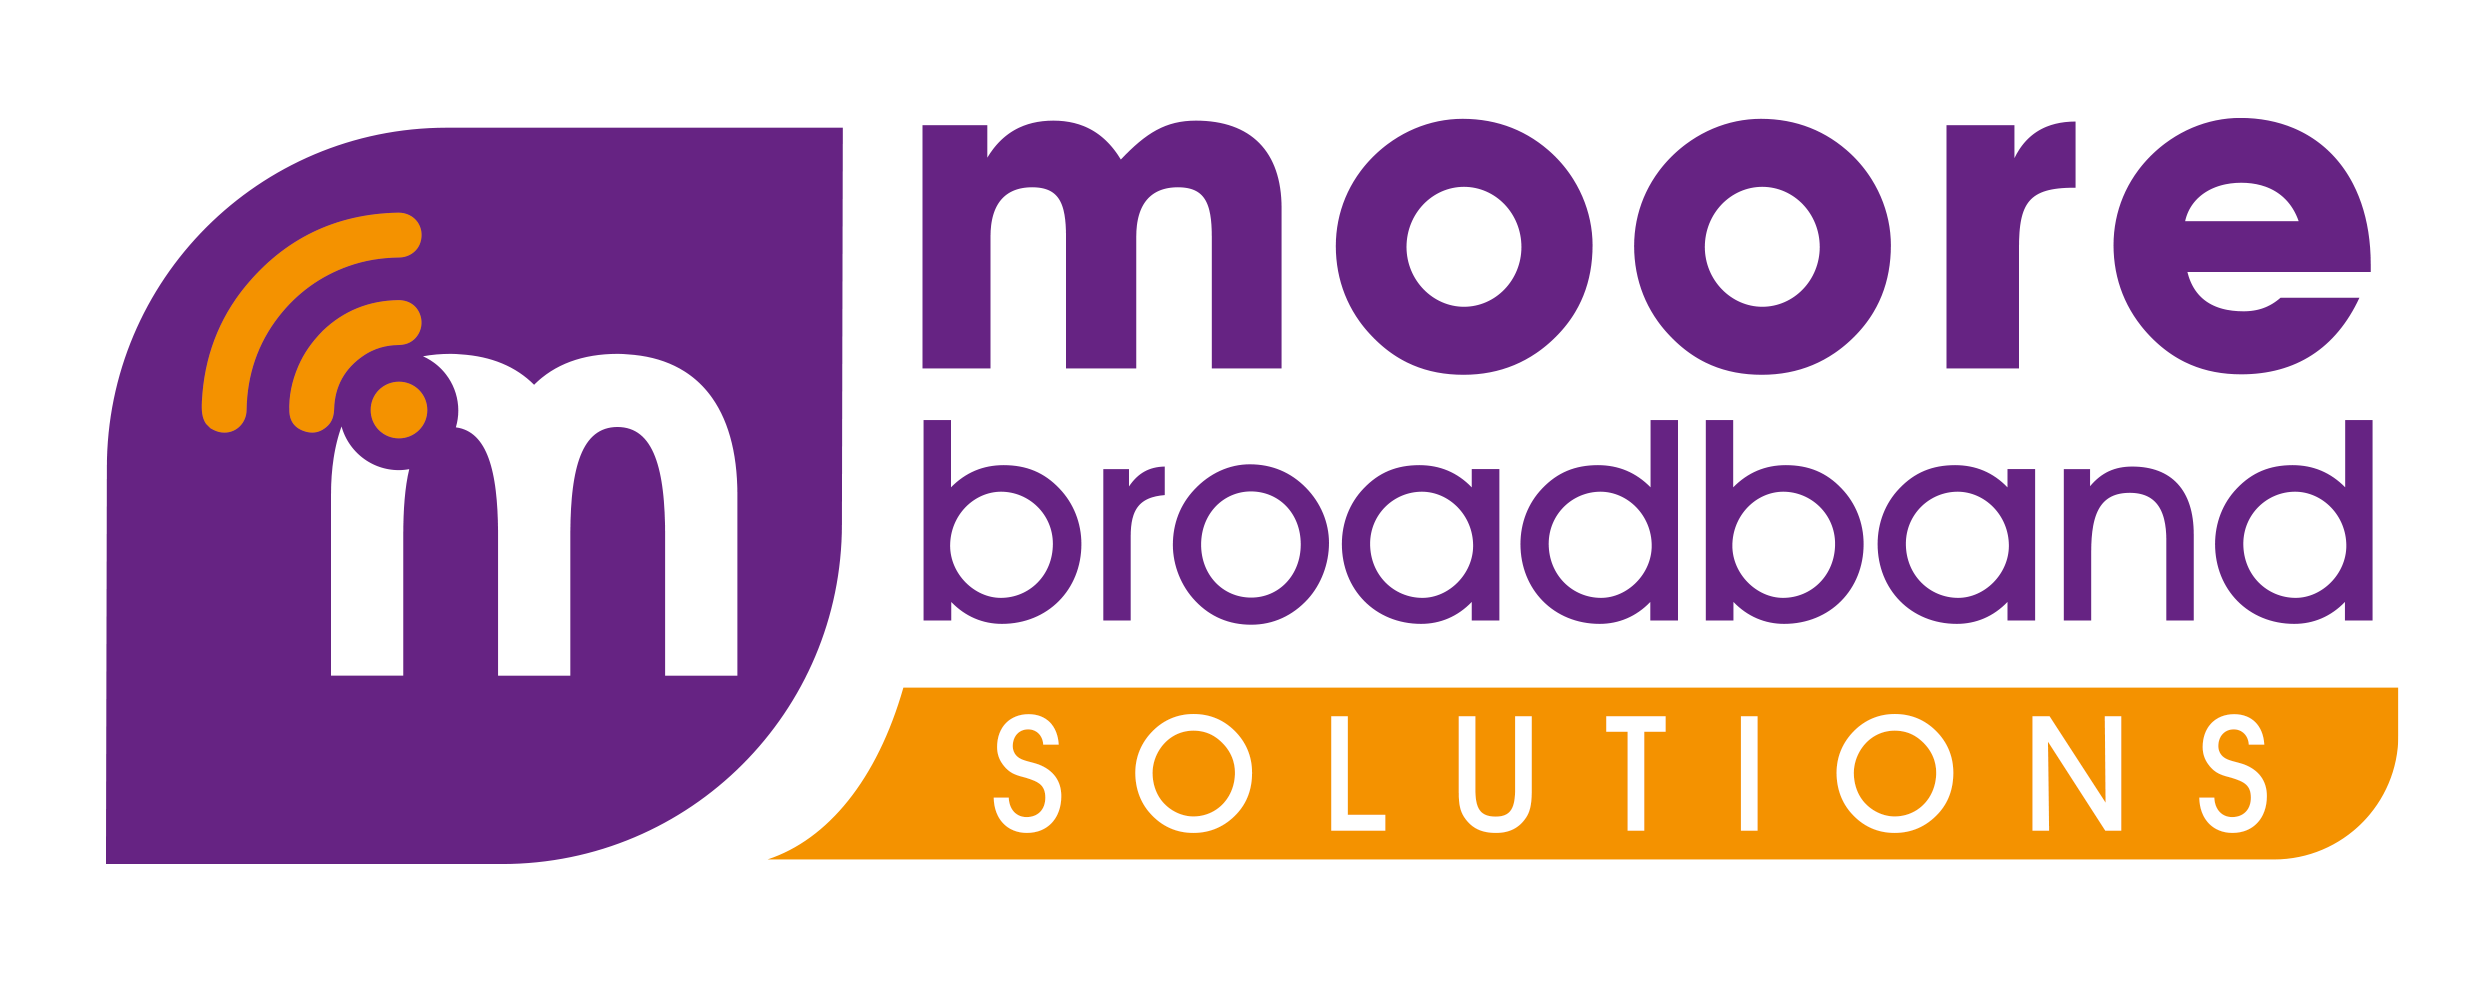 Moore Broadband Logo